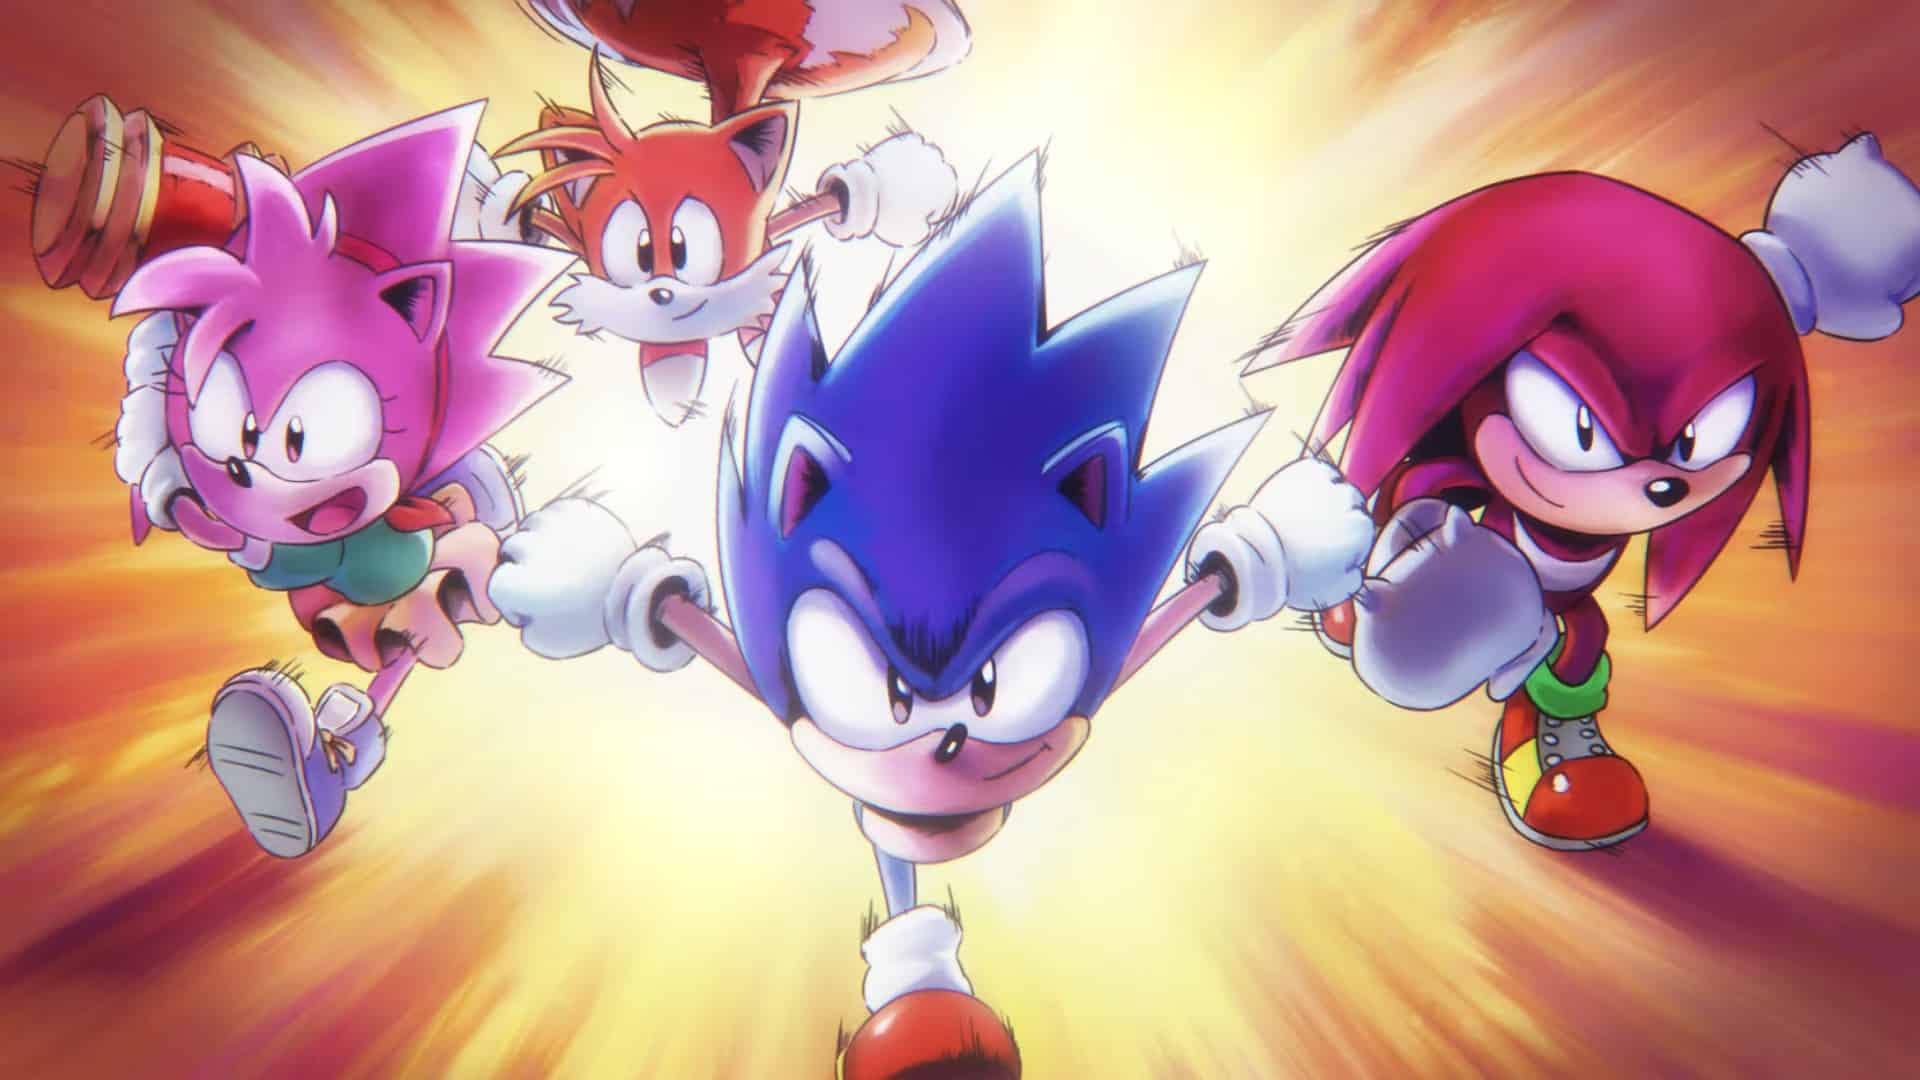 15 Secrets Hidden Inside Sonic The Hedgehog Games